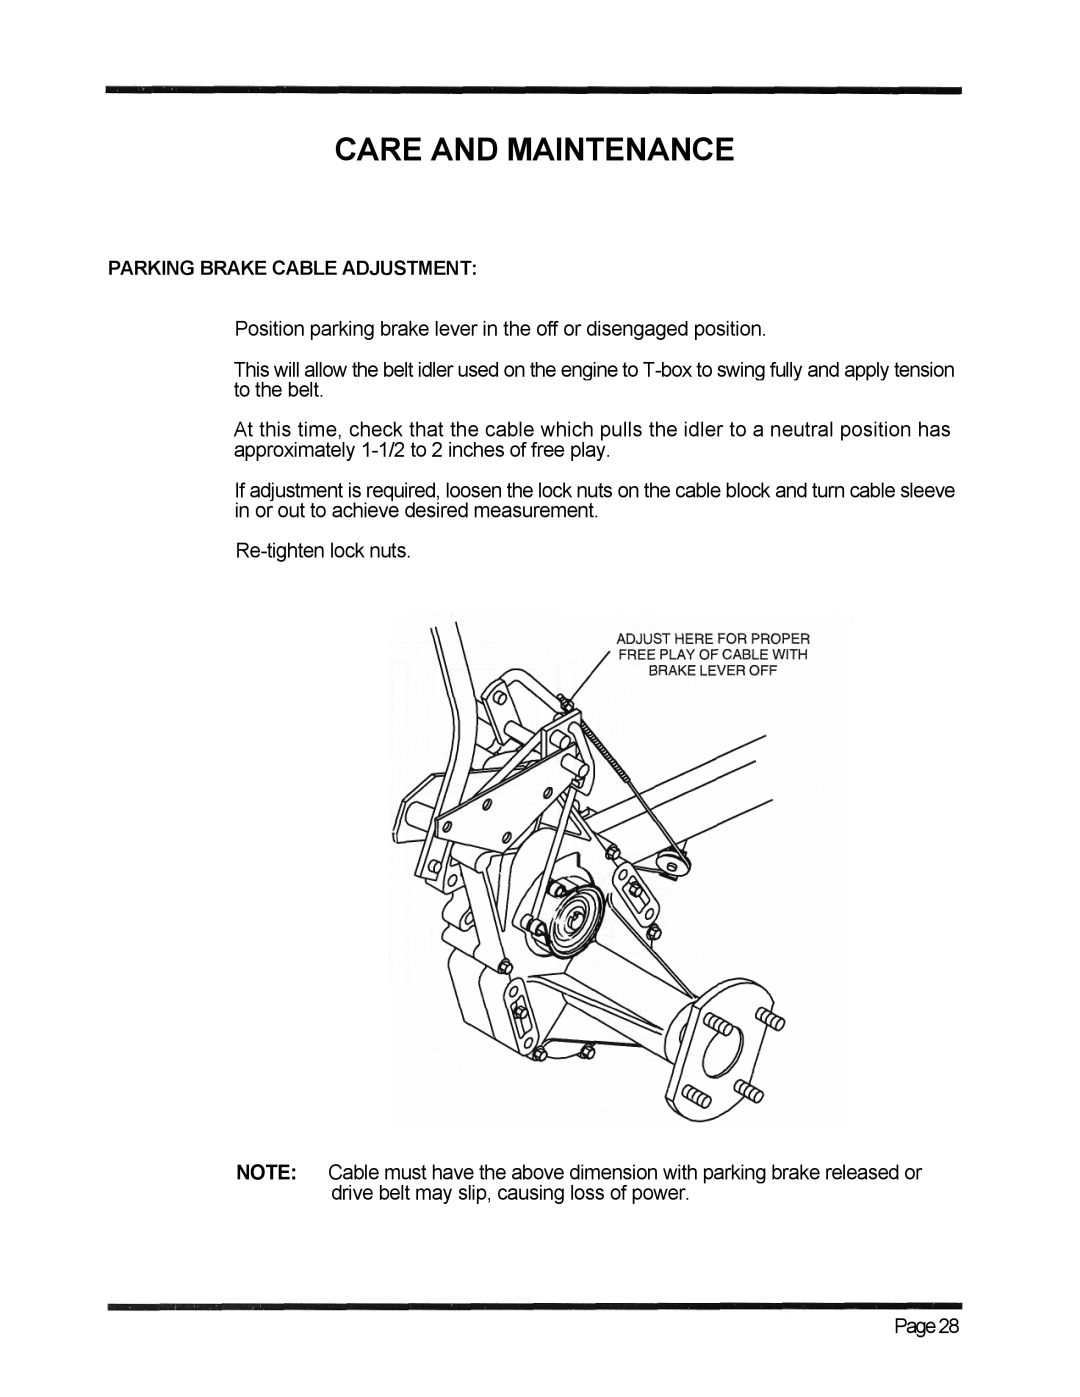 Dixon 6601 Series manual Care And Maintenance, Parking Brake Cable Adjustment 